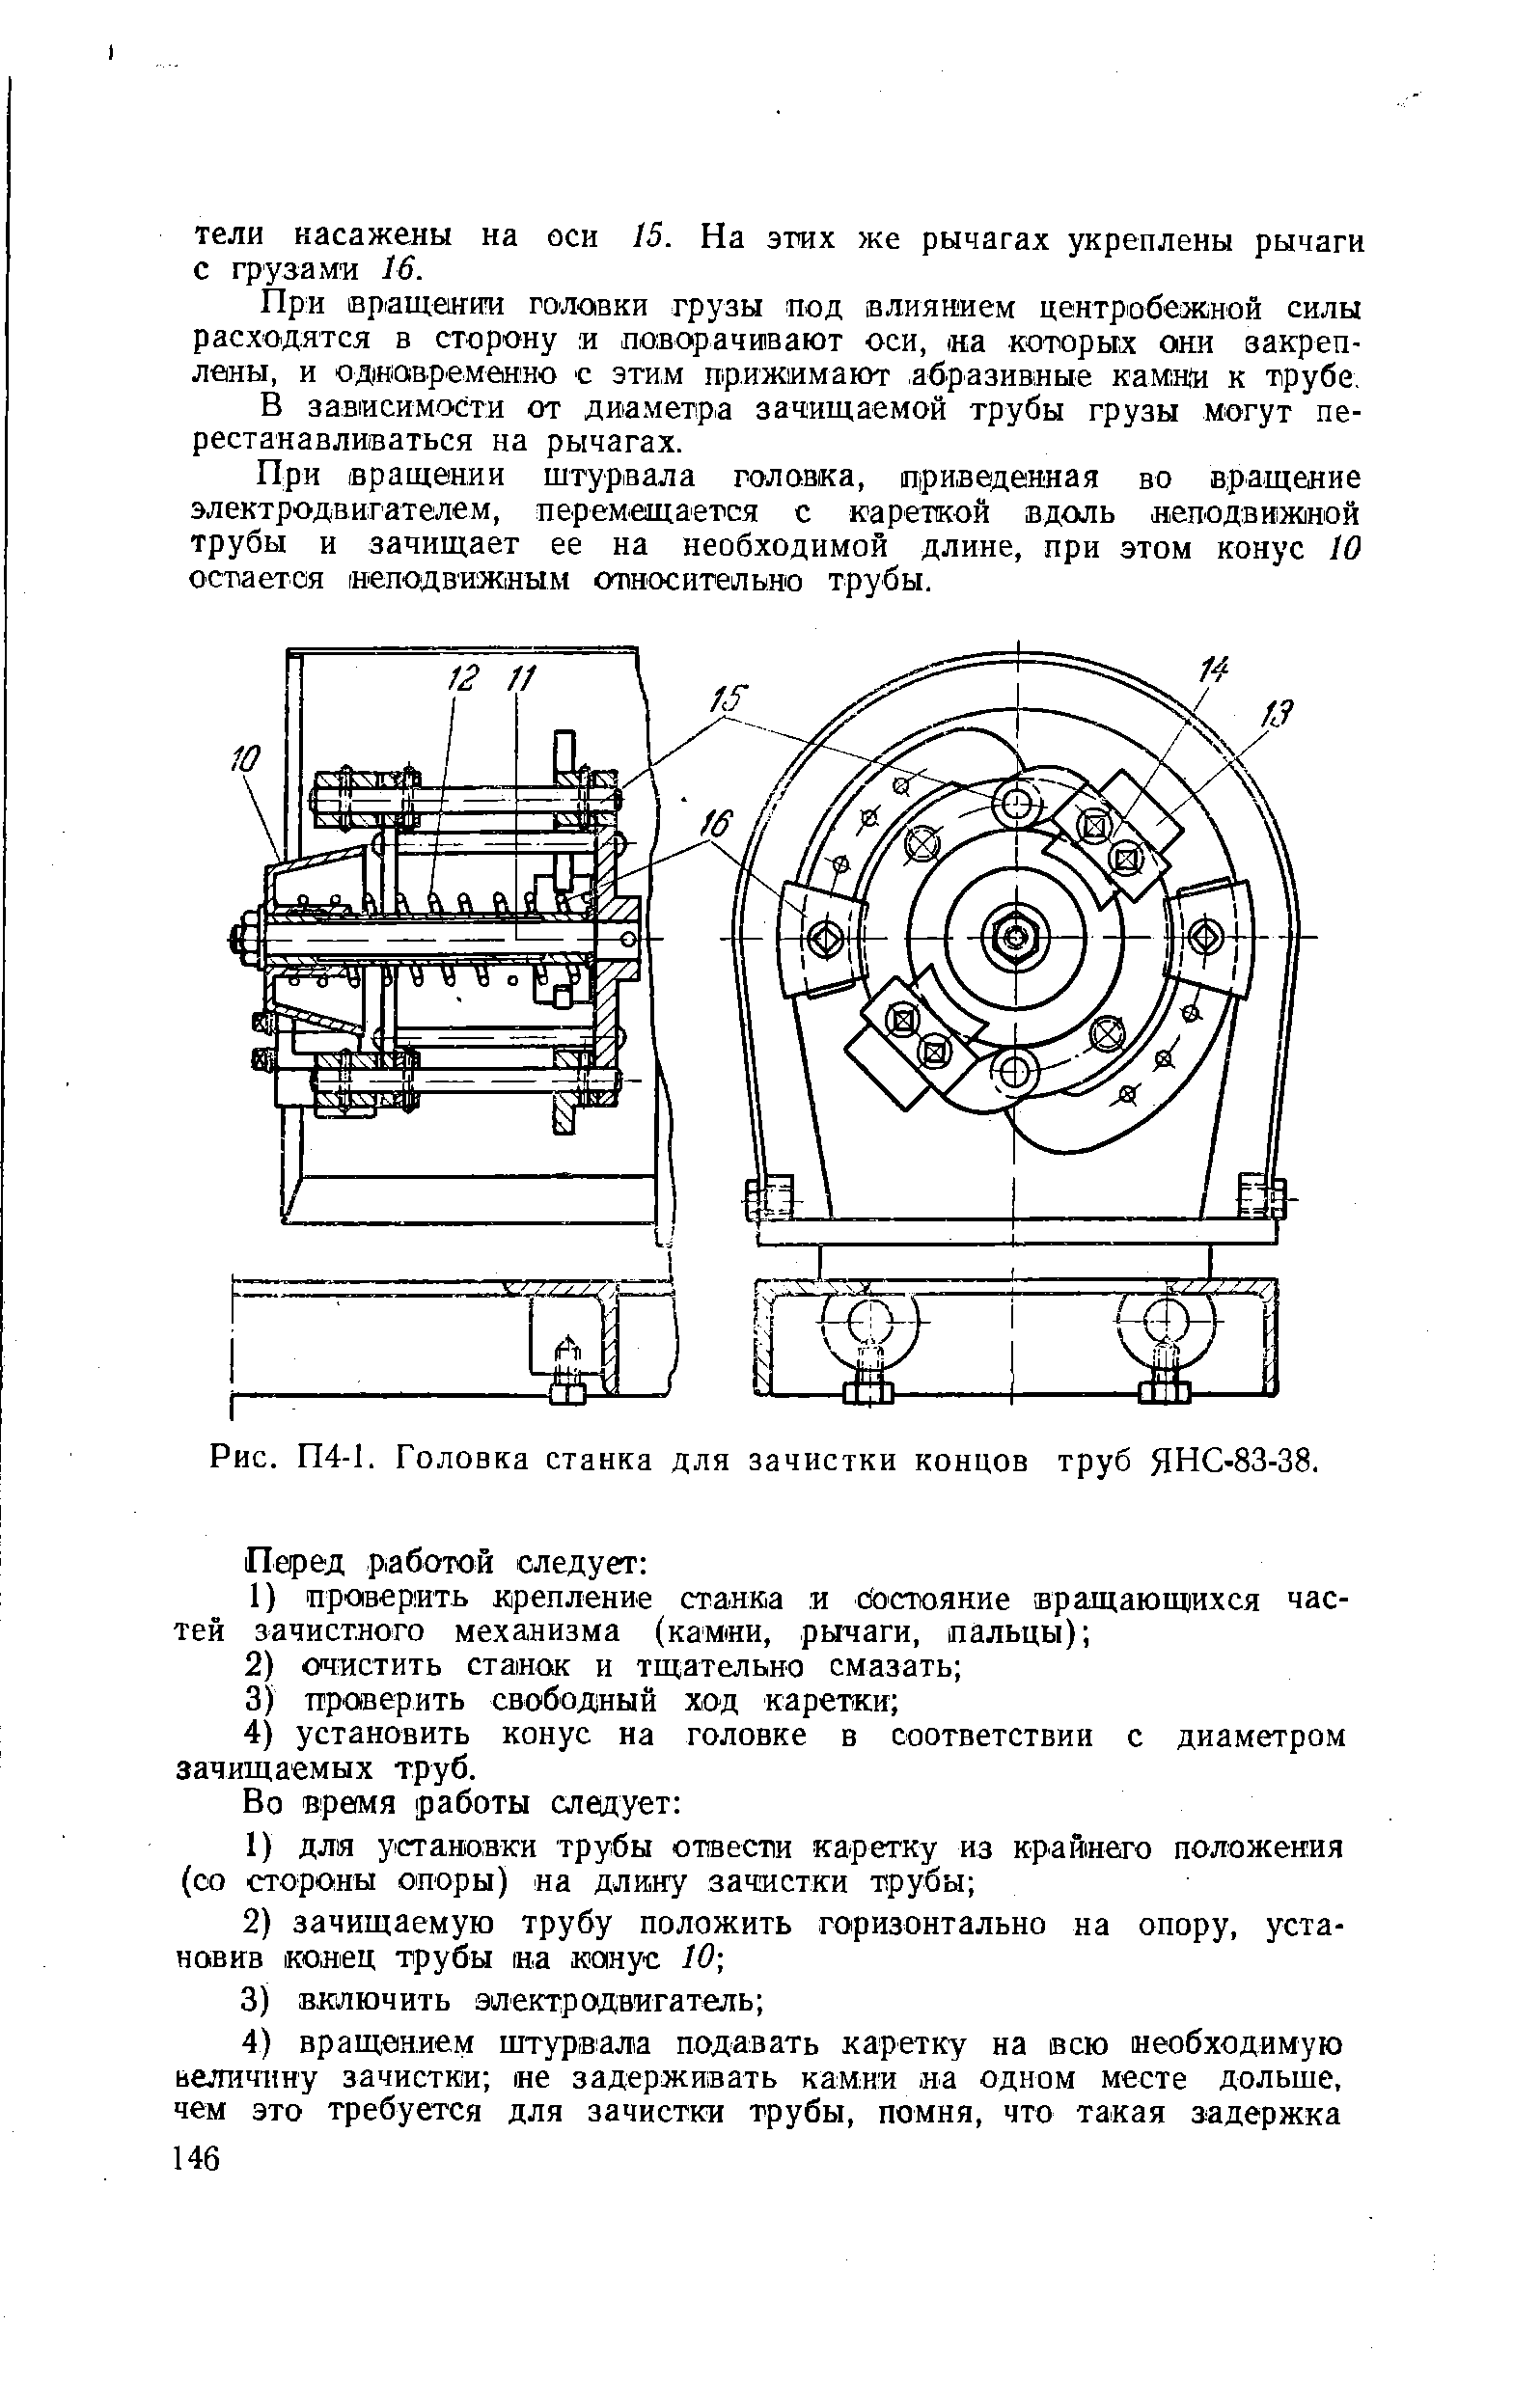 Рис. П4-1. Головка станка для зачистки концов труб ЯНС-83-38.
